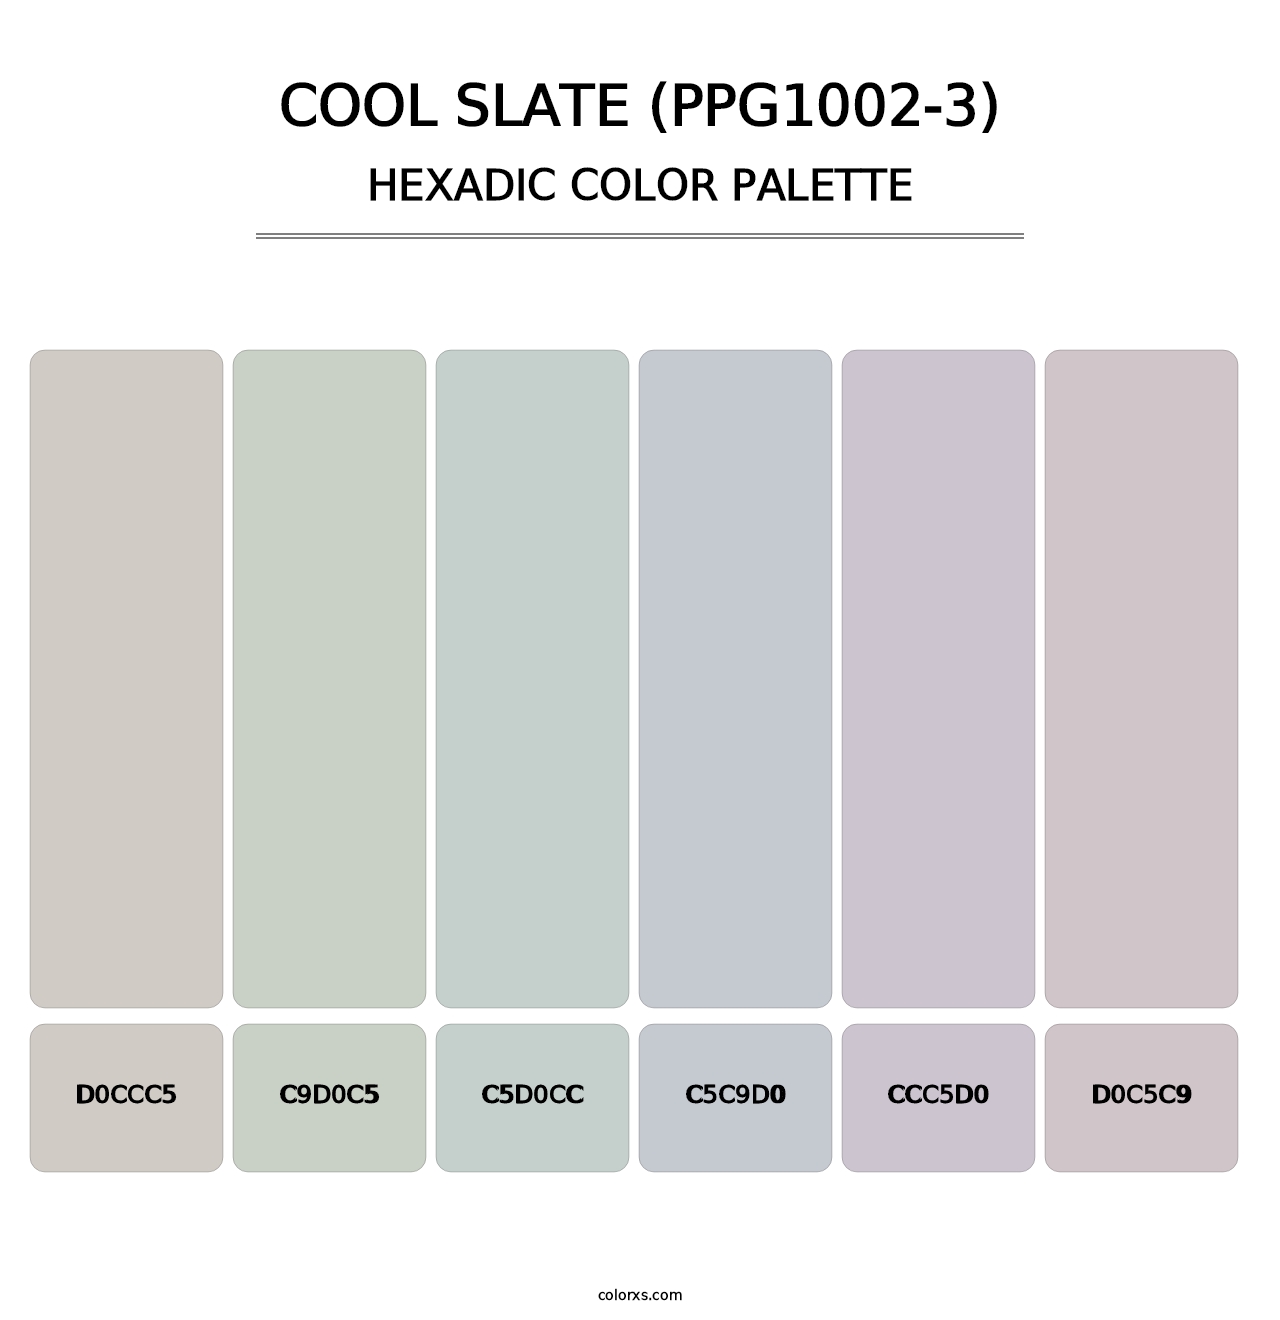 Cool Slate (PPG1002-3) - Hexadic Color Palette